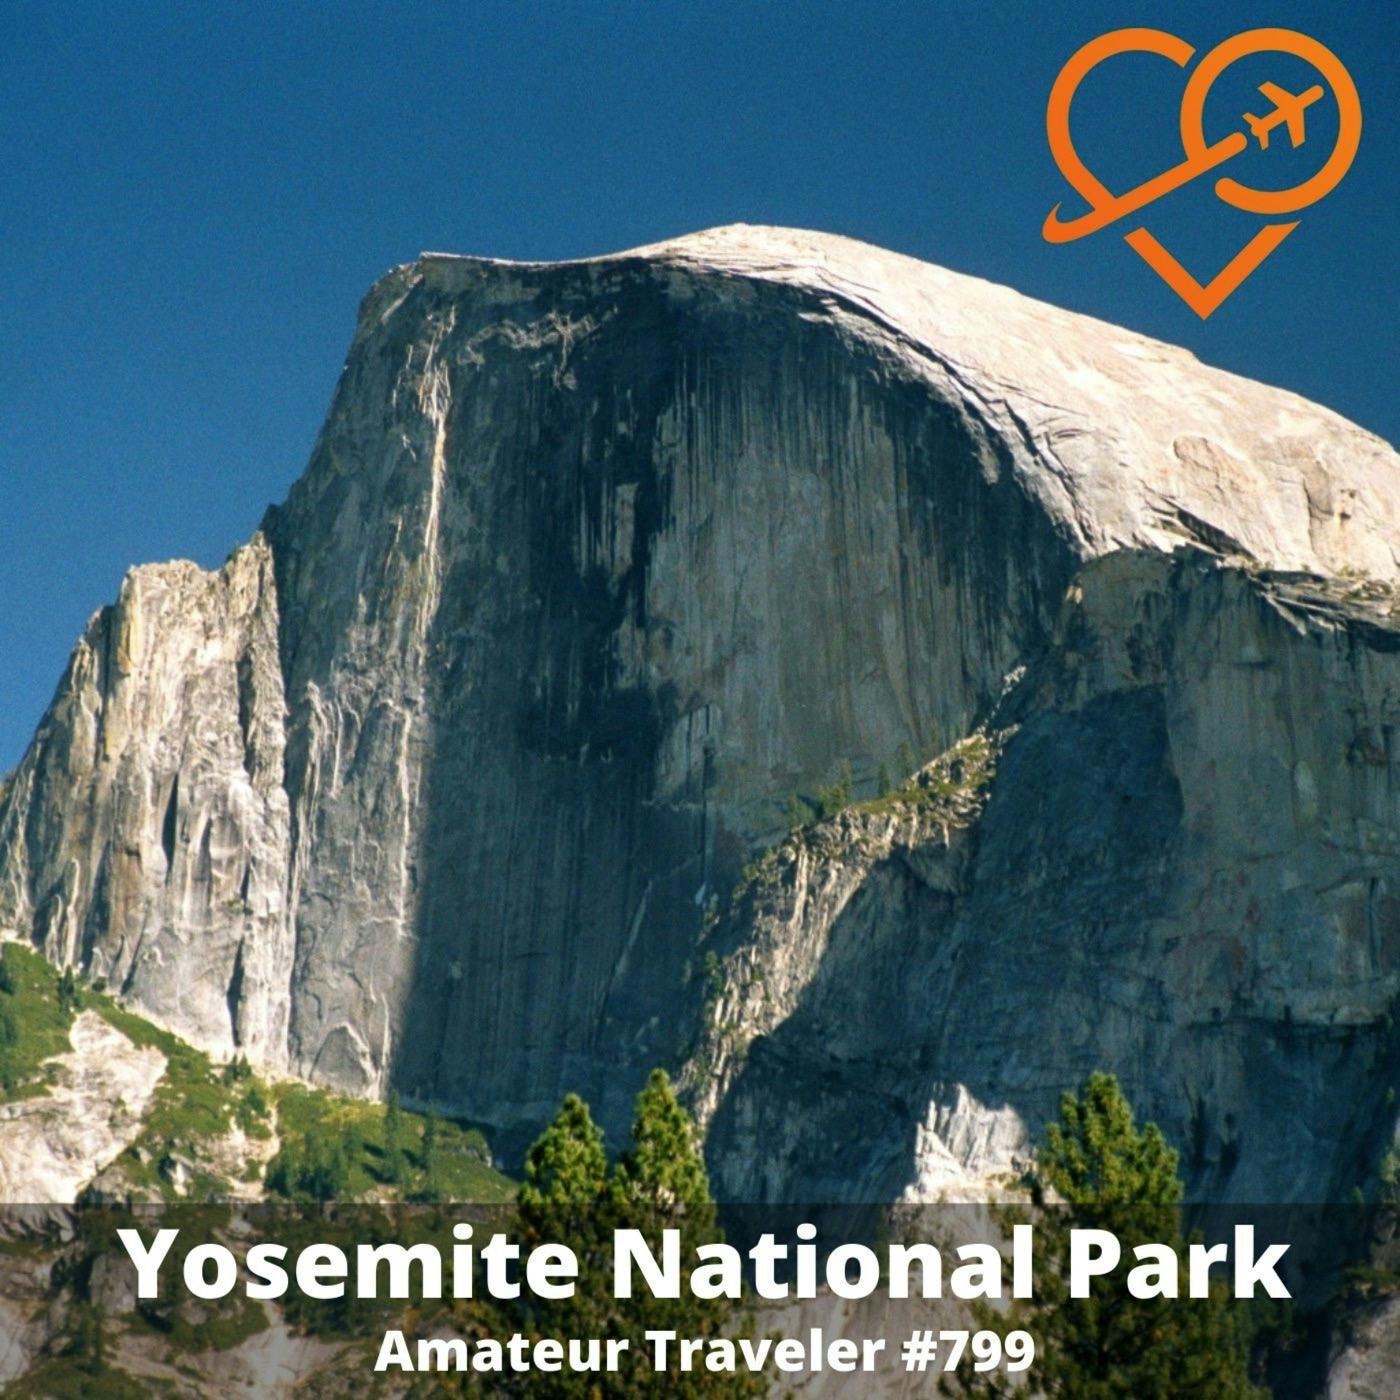 AT#799 - Travel to Yosemite National Park